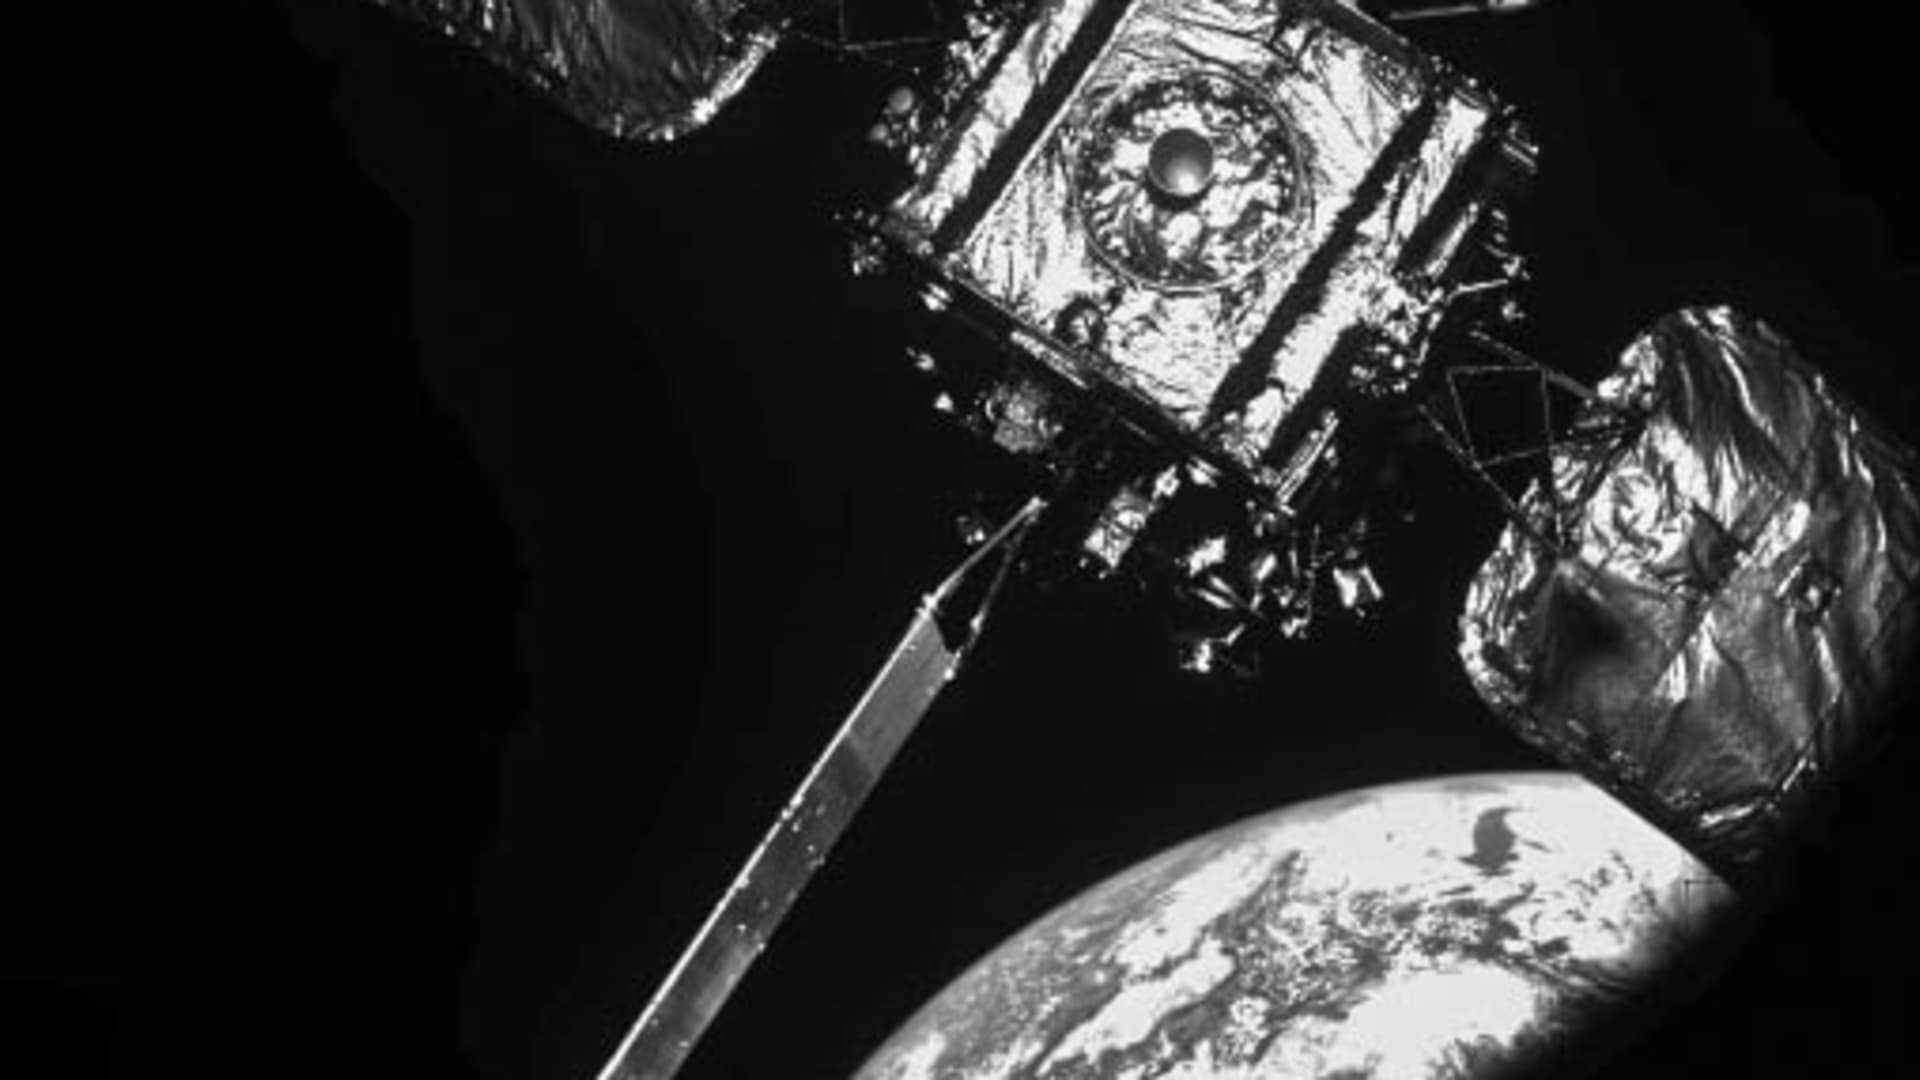 Investing in Space: Intelsat signs up for Northrop Grumman satellite servicing